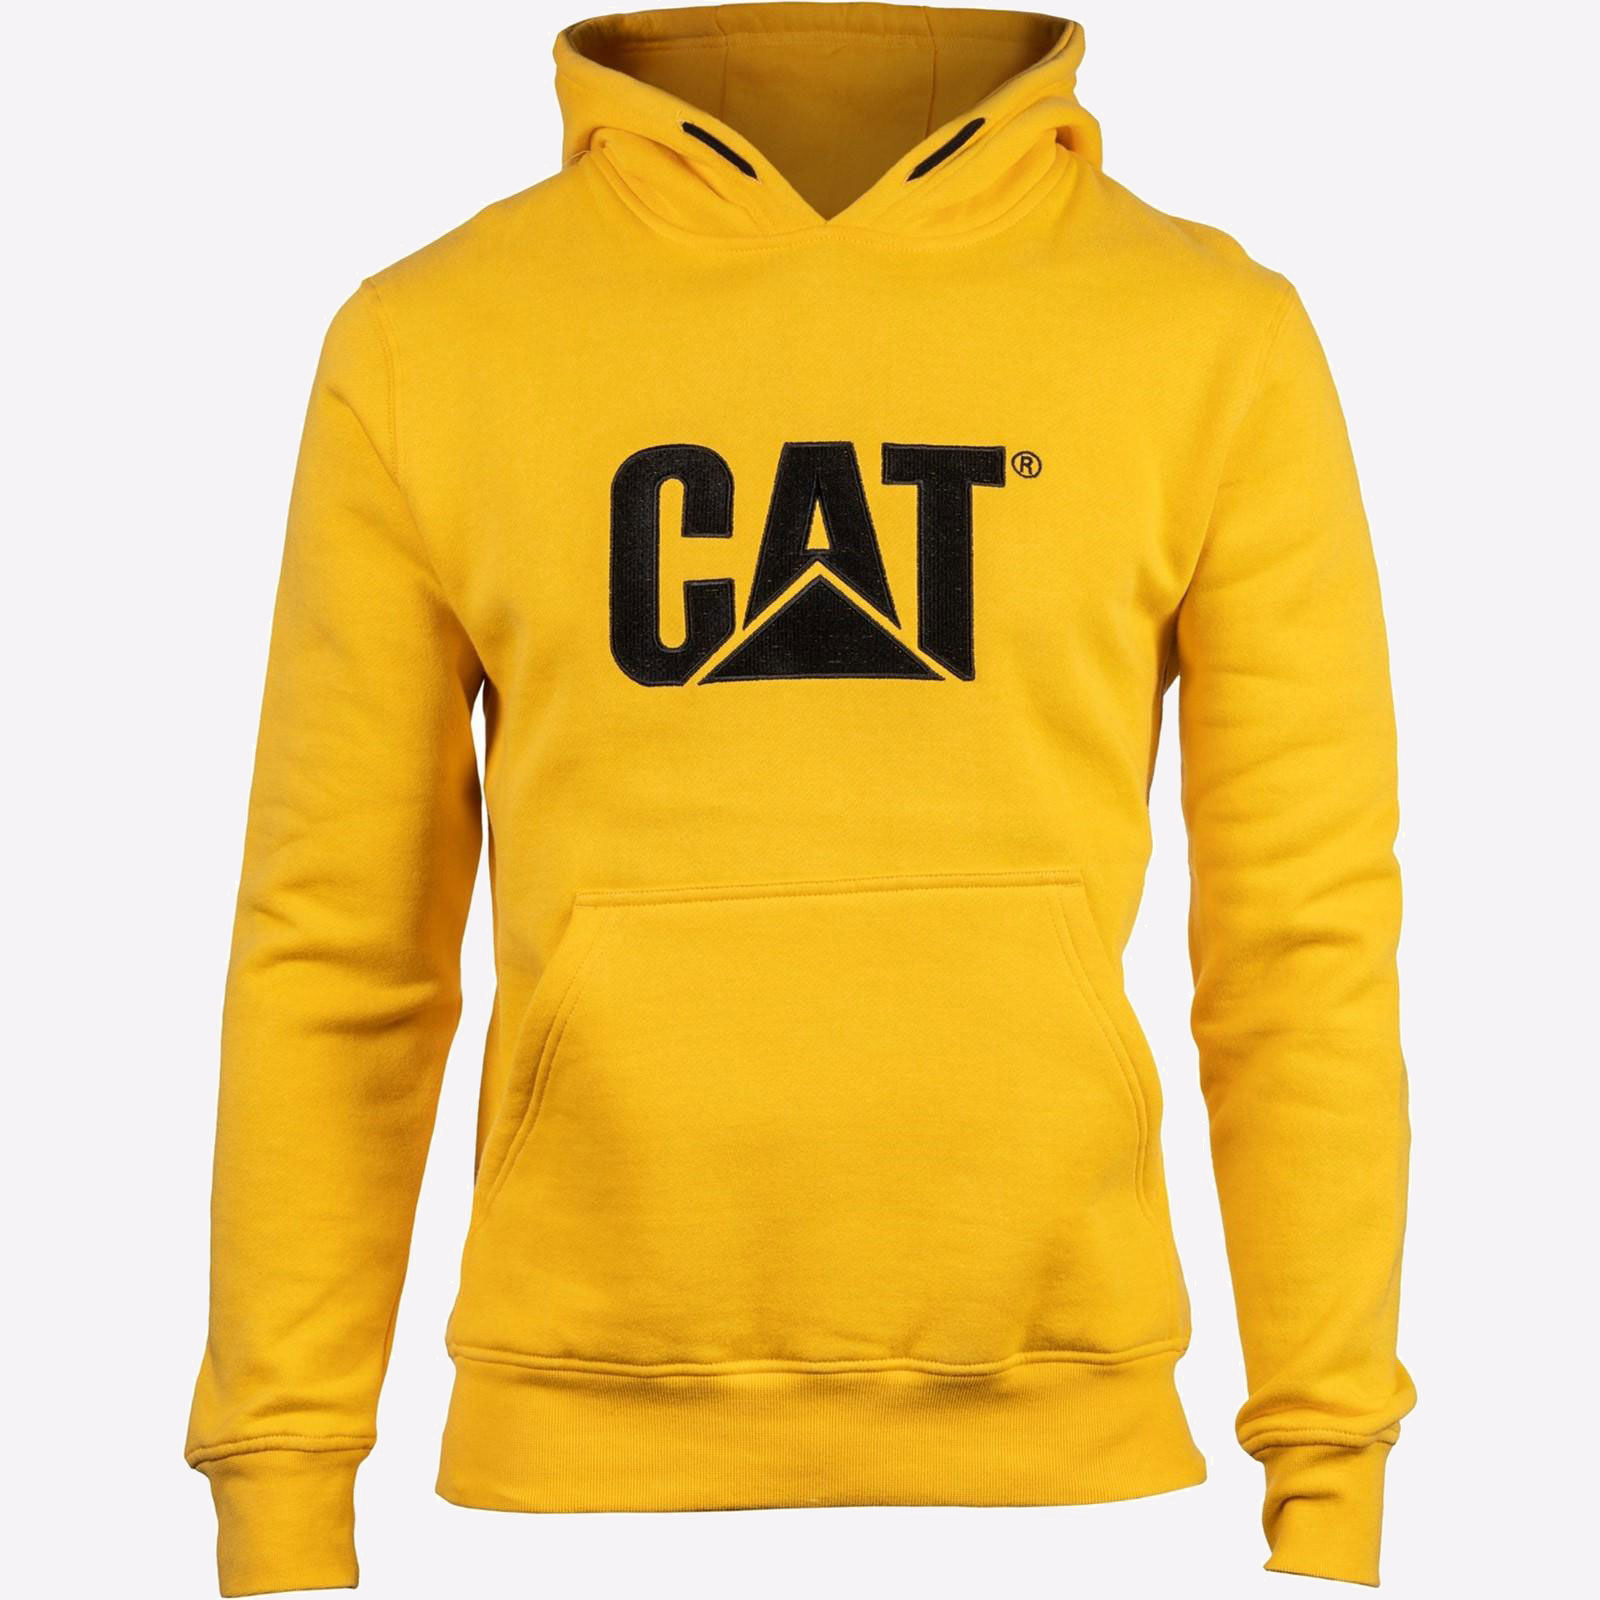 Caterpillar Trademark Hooded Sweatshirt Mens - GRD-19634-57739-09